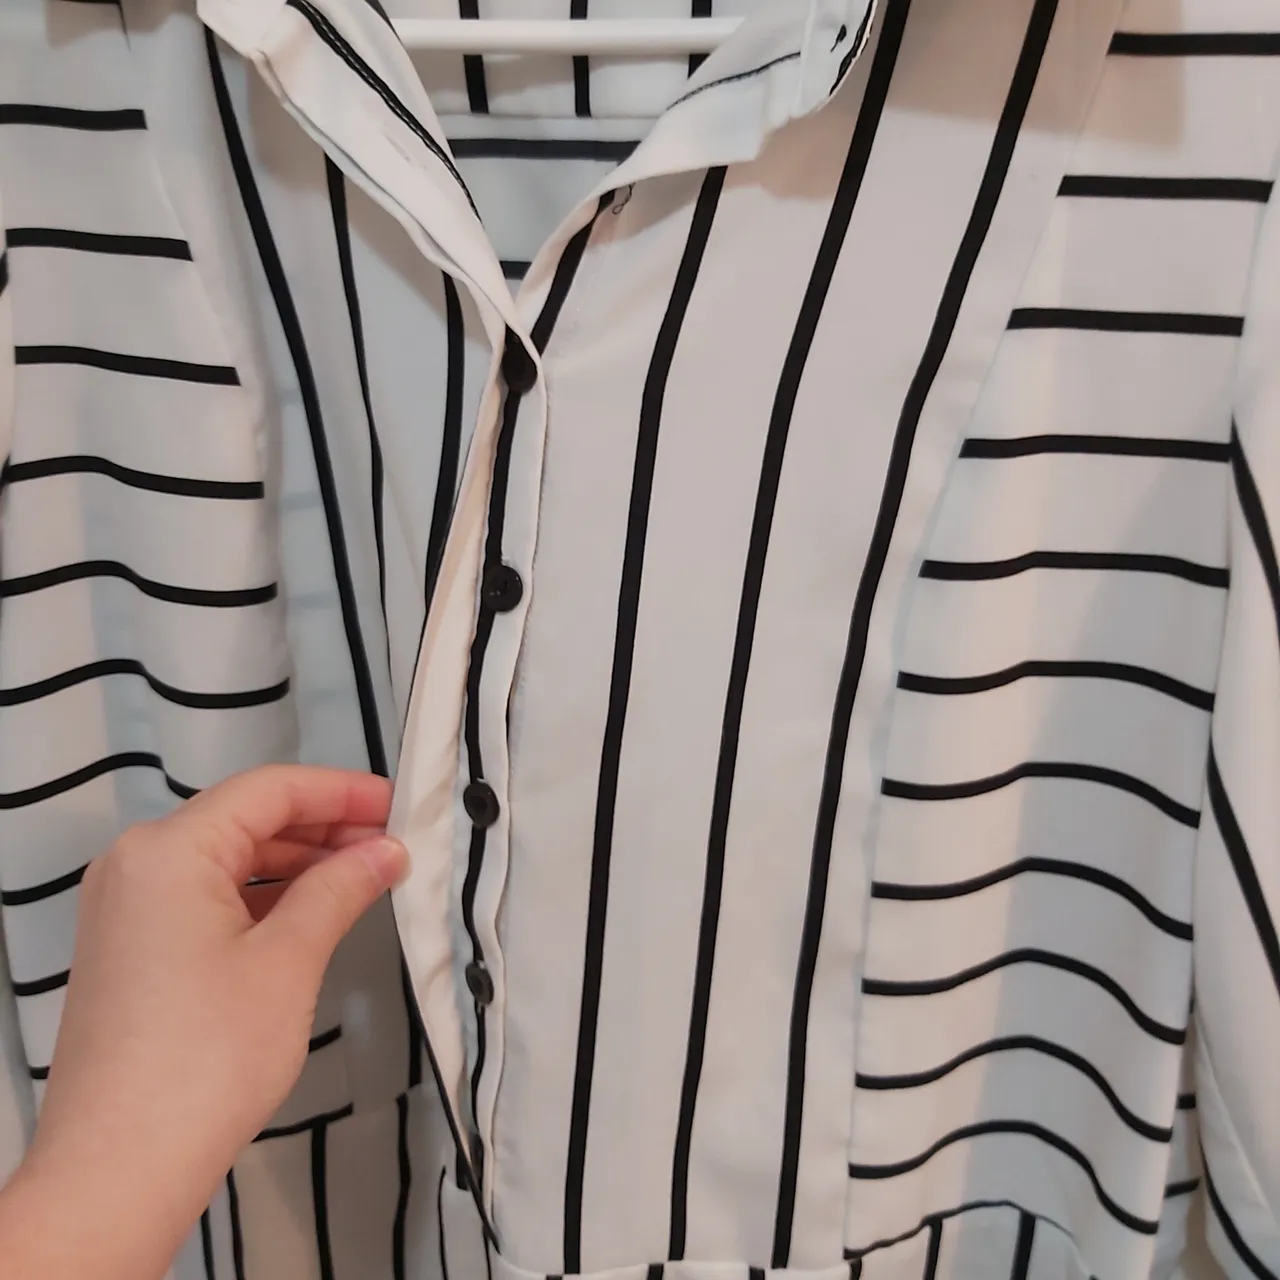 WD NY white tunic with black stripes photo 4